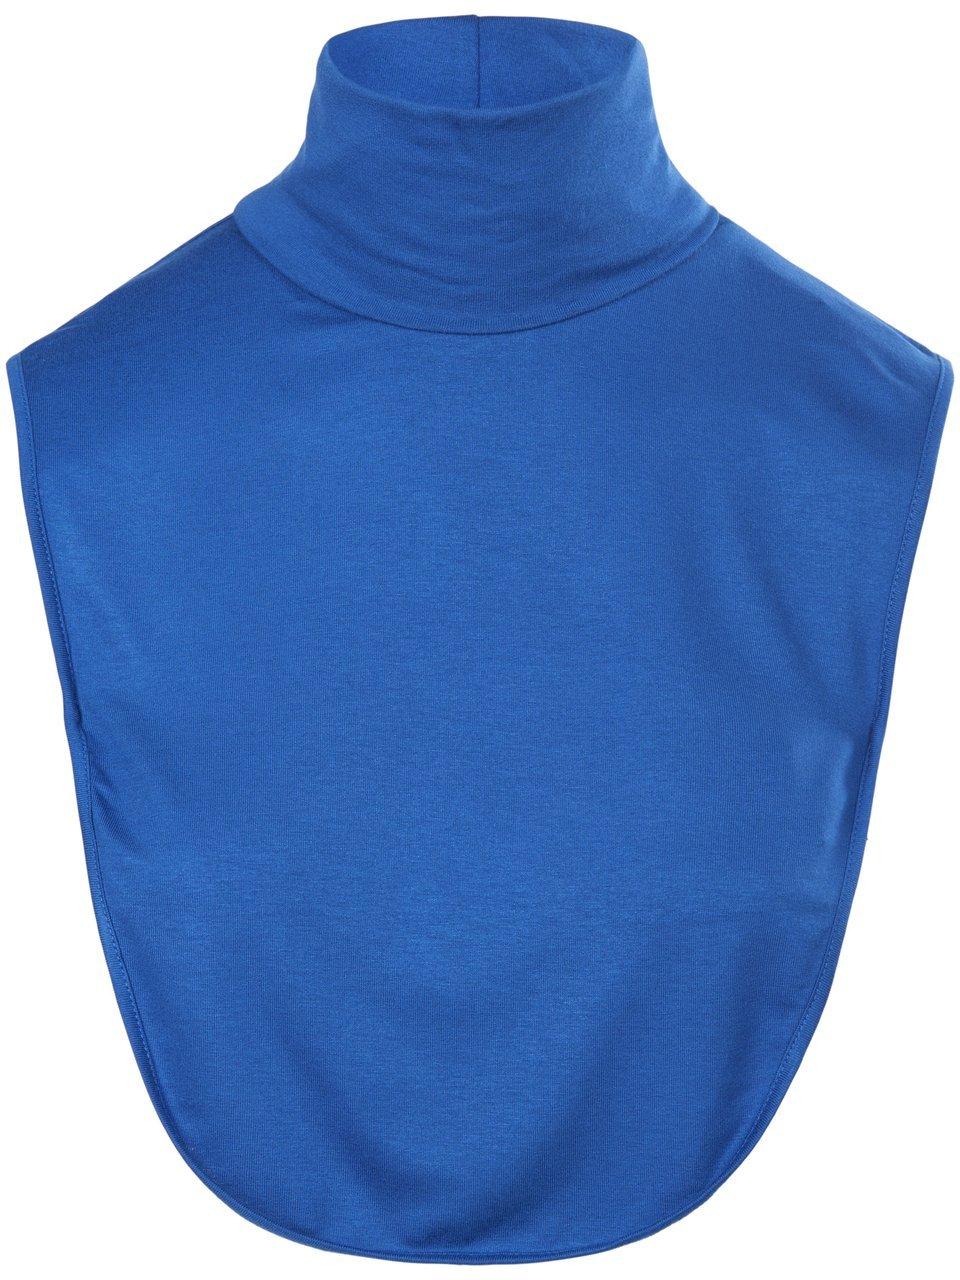 Image of Roll-neck made of viscose jersey Uta Raasch blue